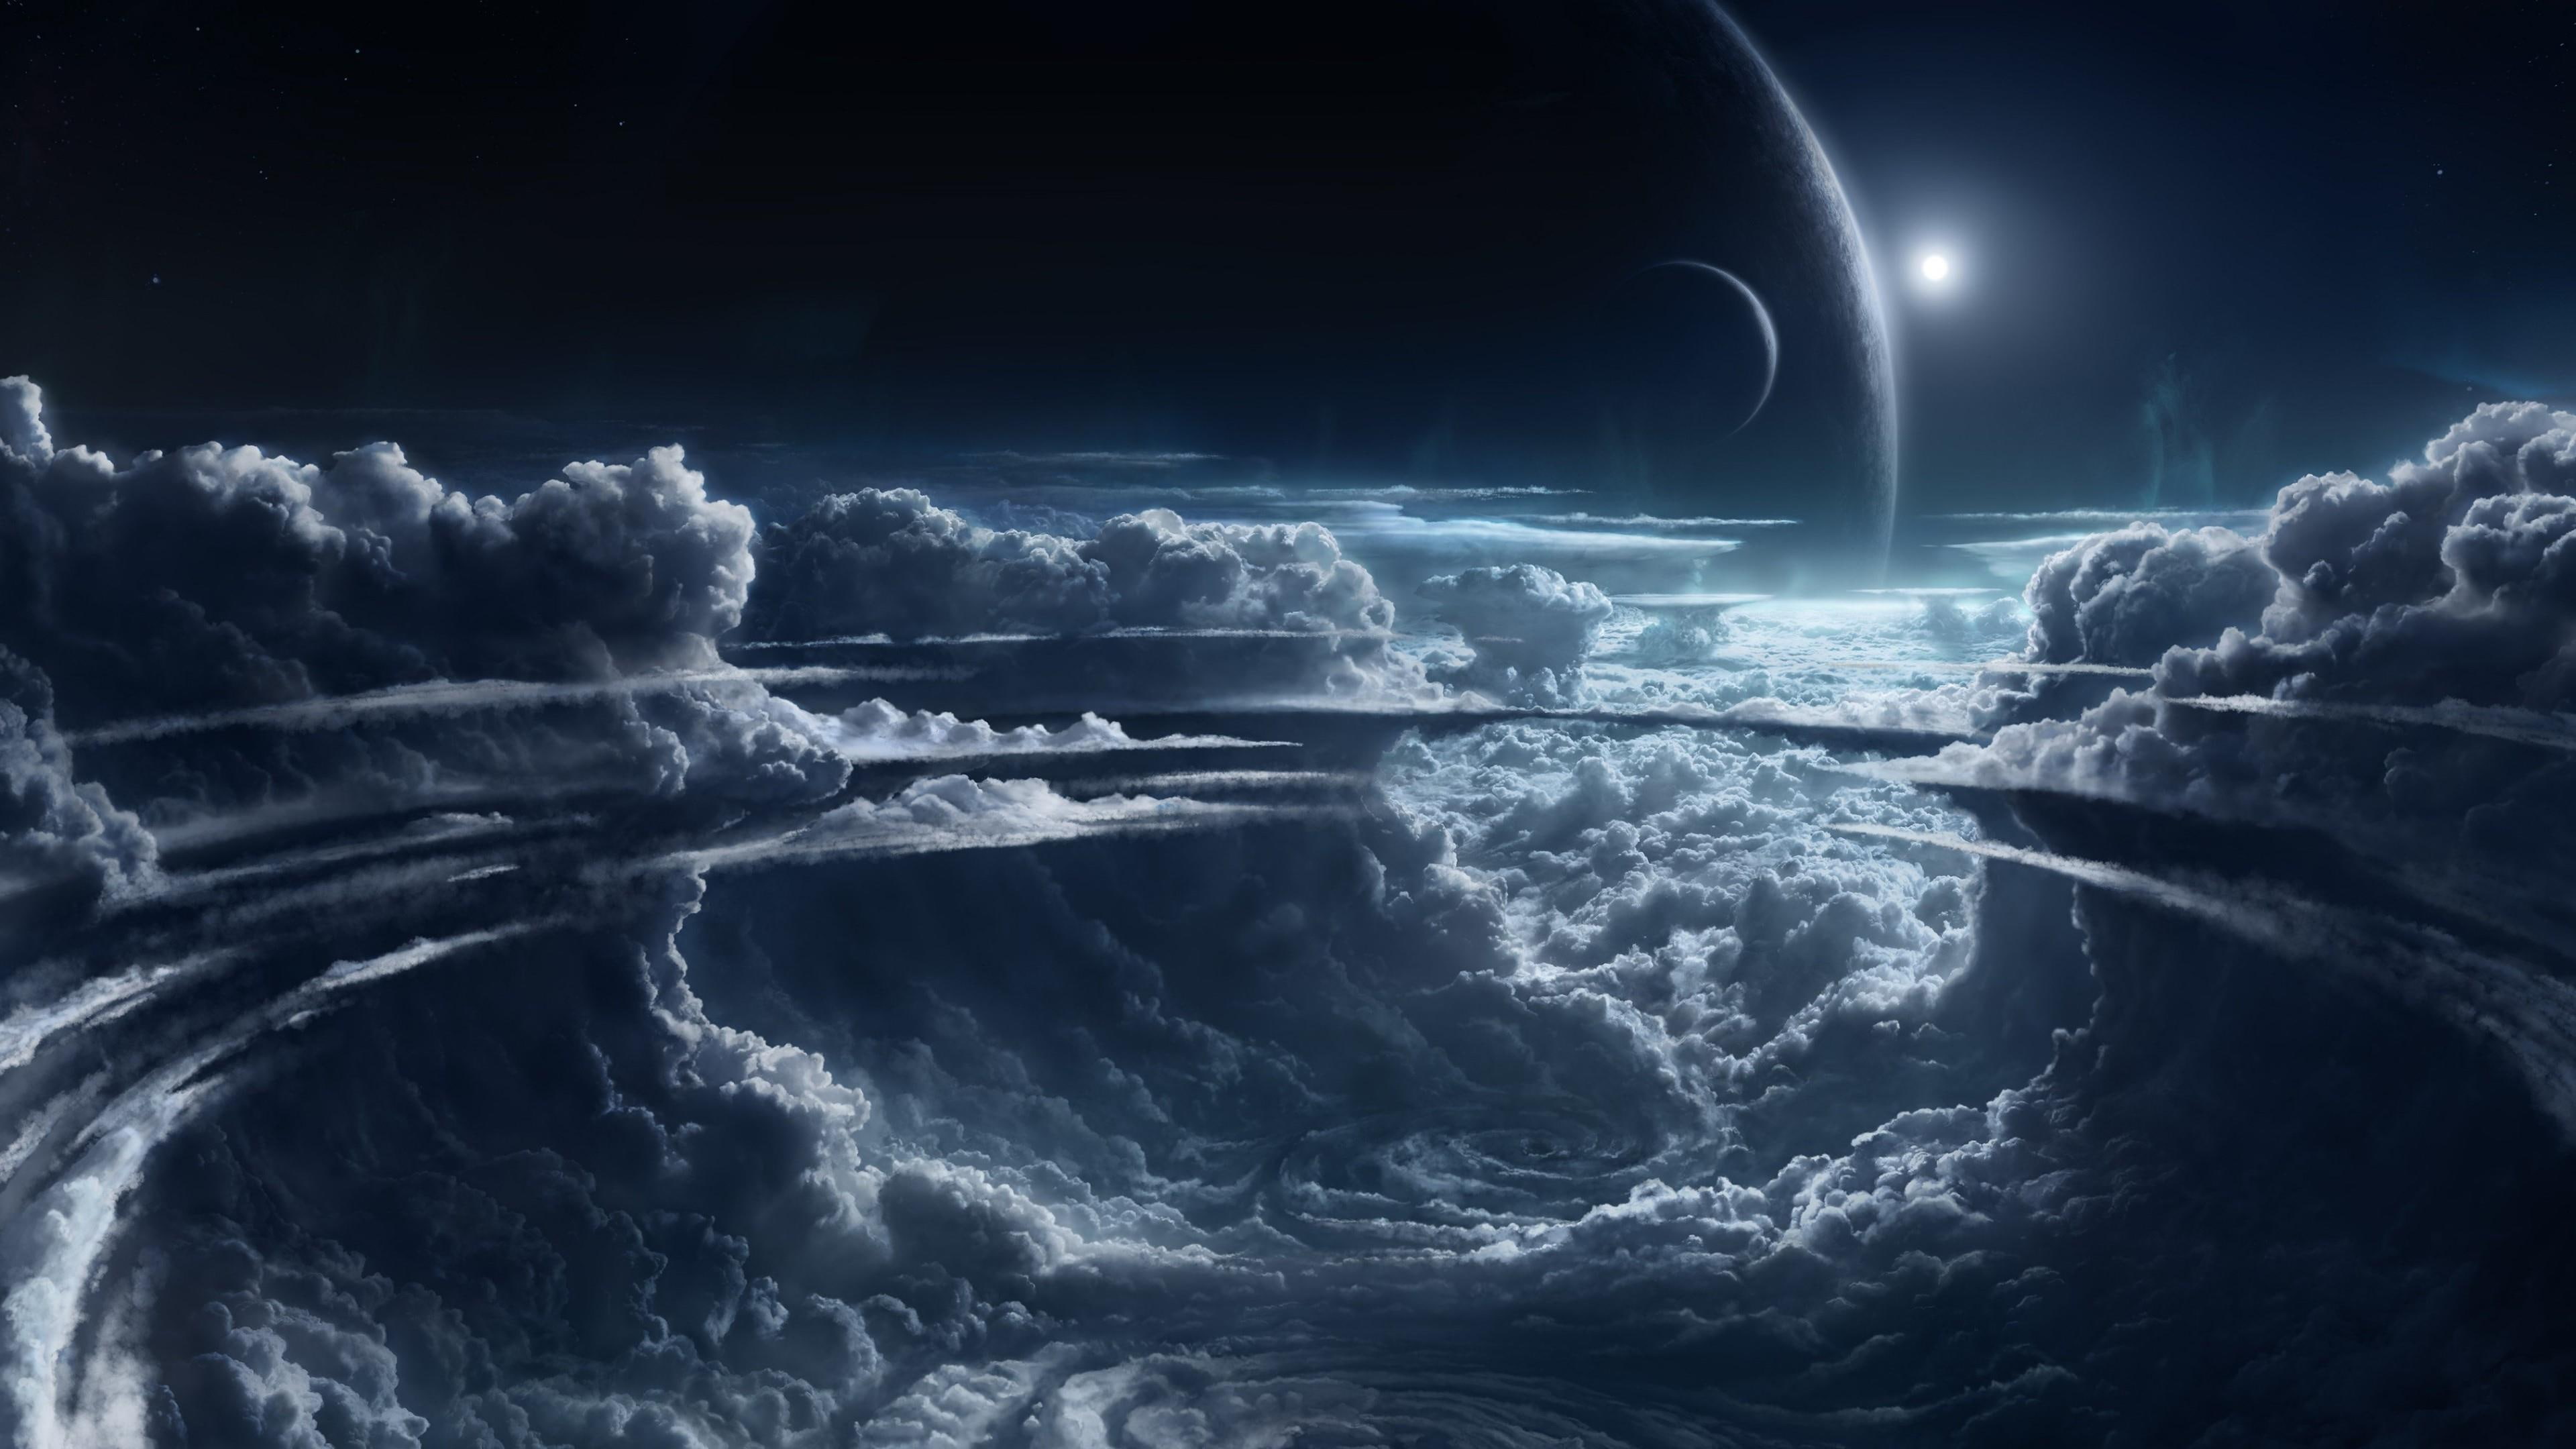 space art, fantasy art, sky, clouds, moonlight, universe, planet